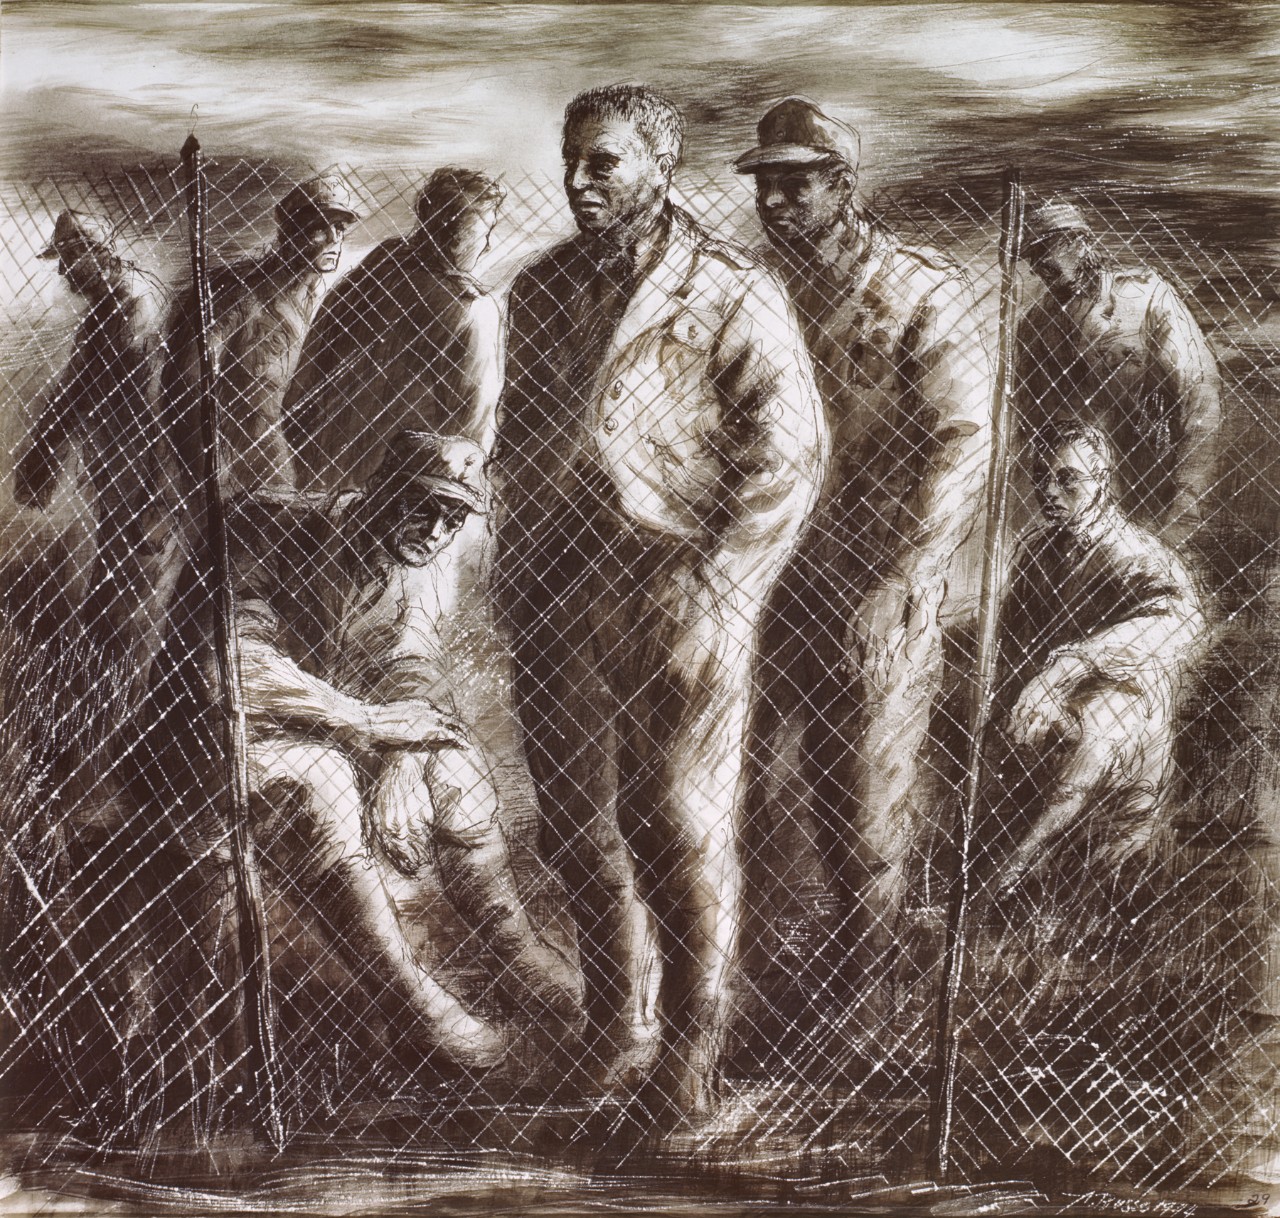 German prisoners behind barbed wire fence